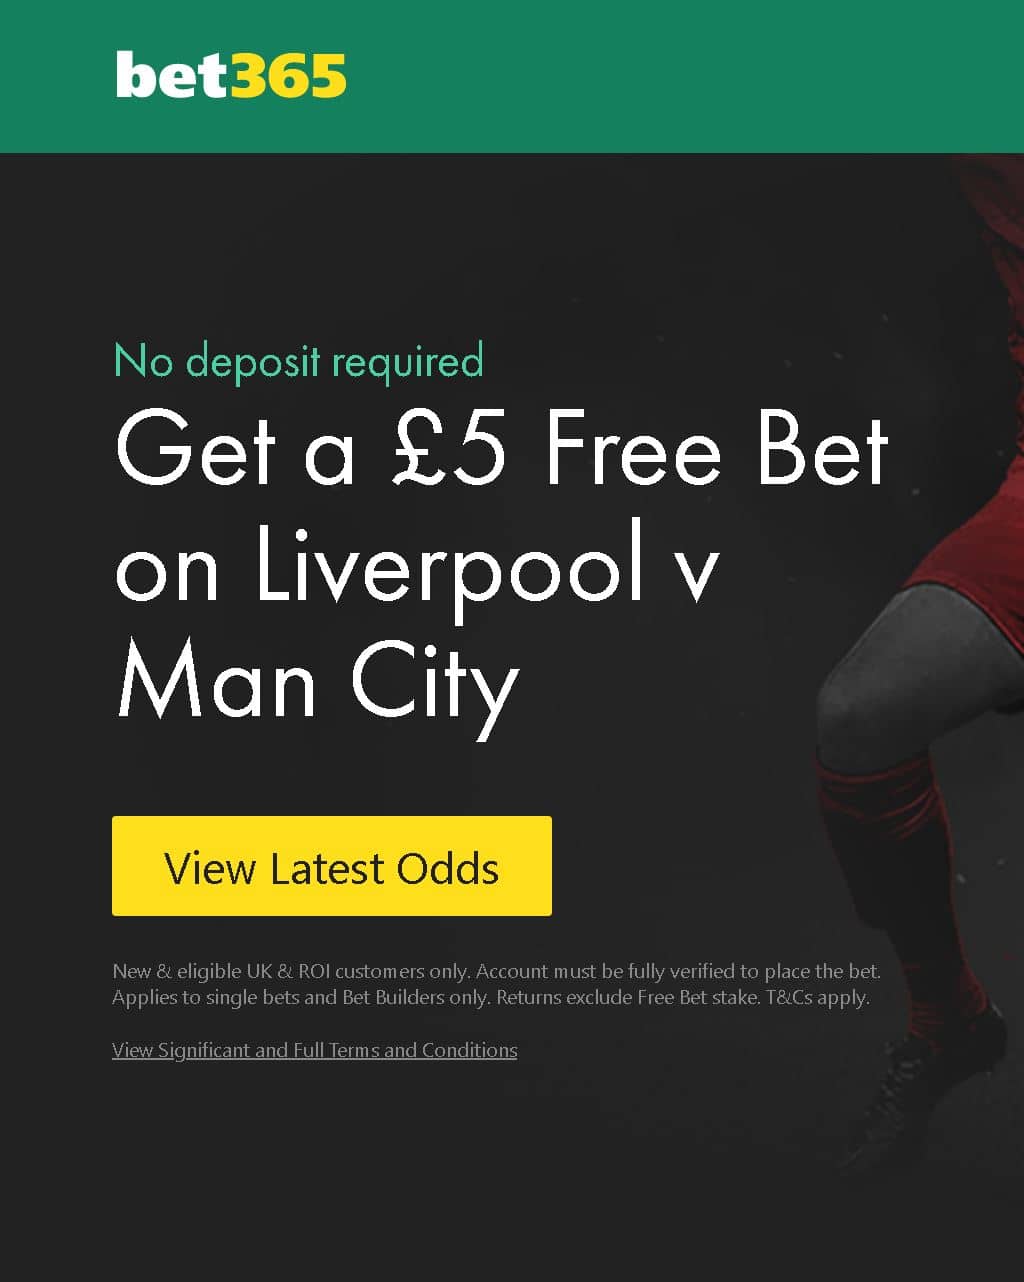 Liverpool v Man City no deposit £5